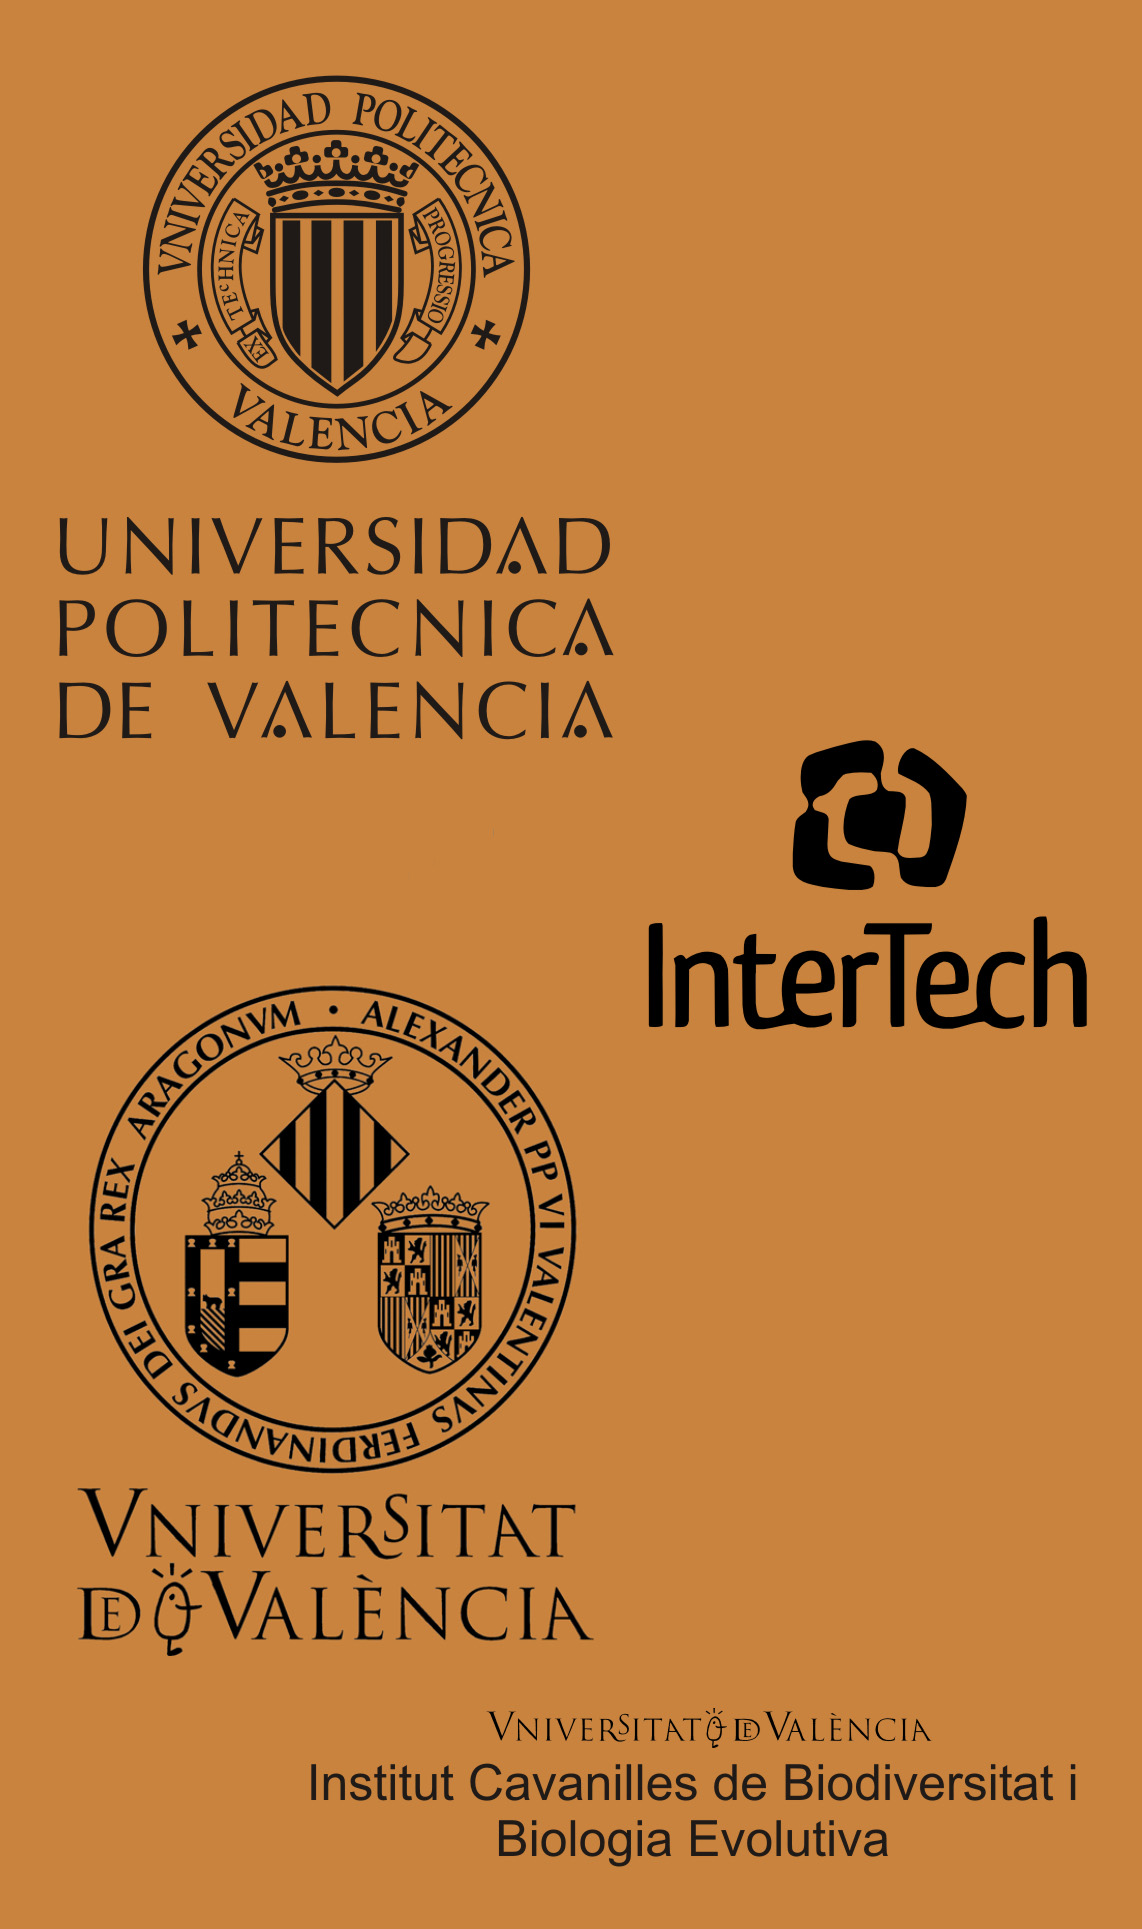 Valencia logos juntos.jpg